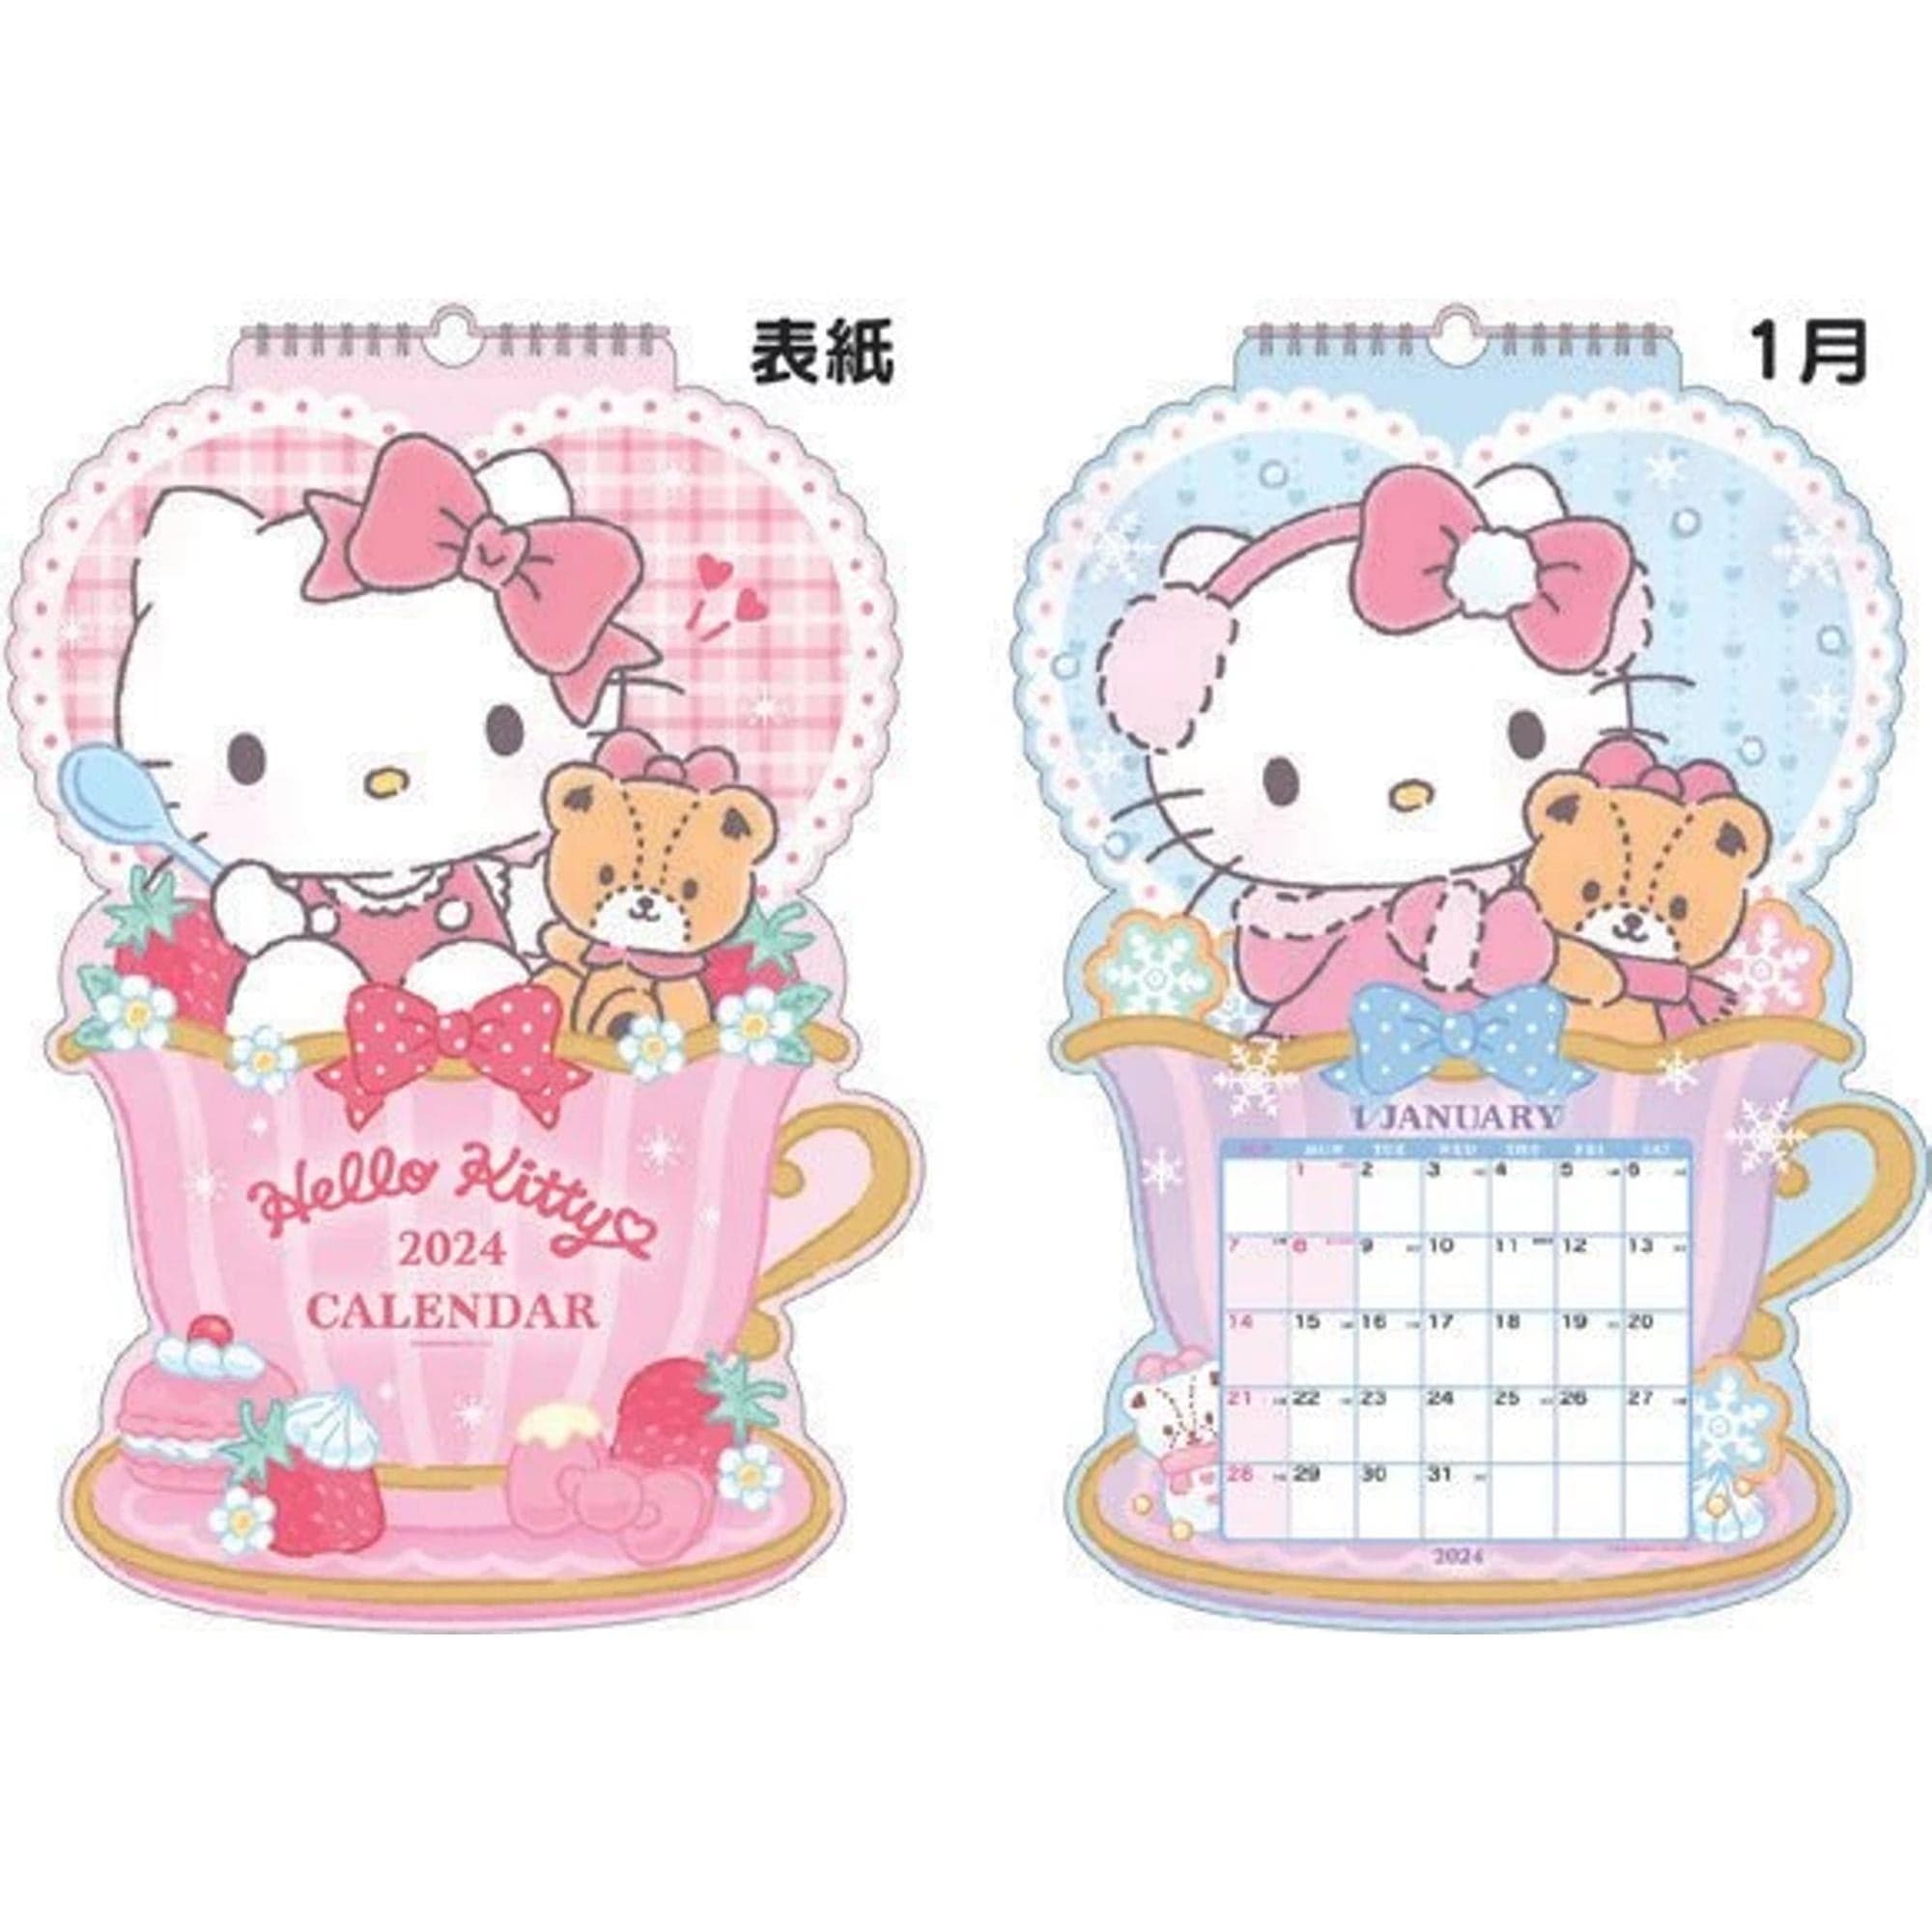 Hello Kitty desk calendar 2024,from January to December,Japanese